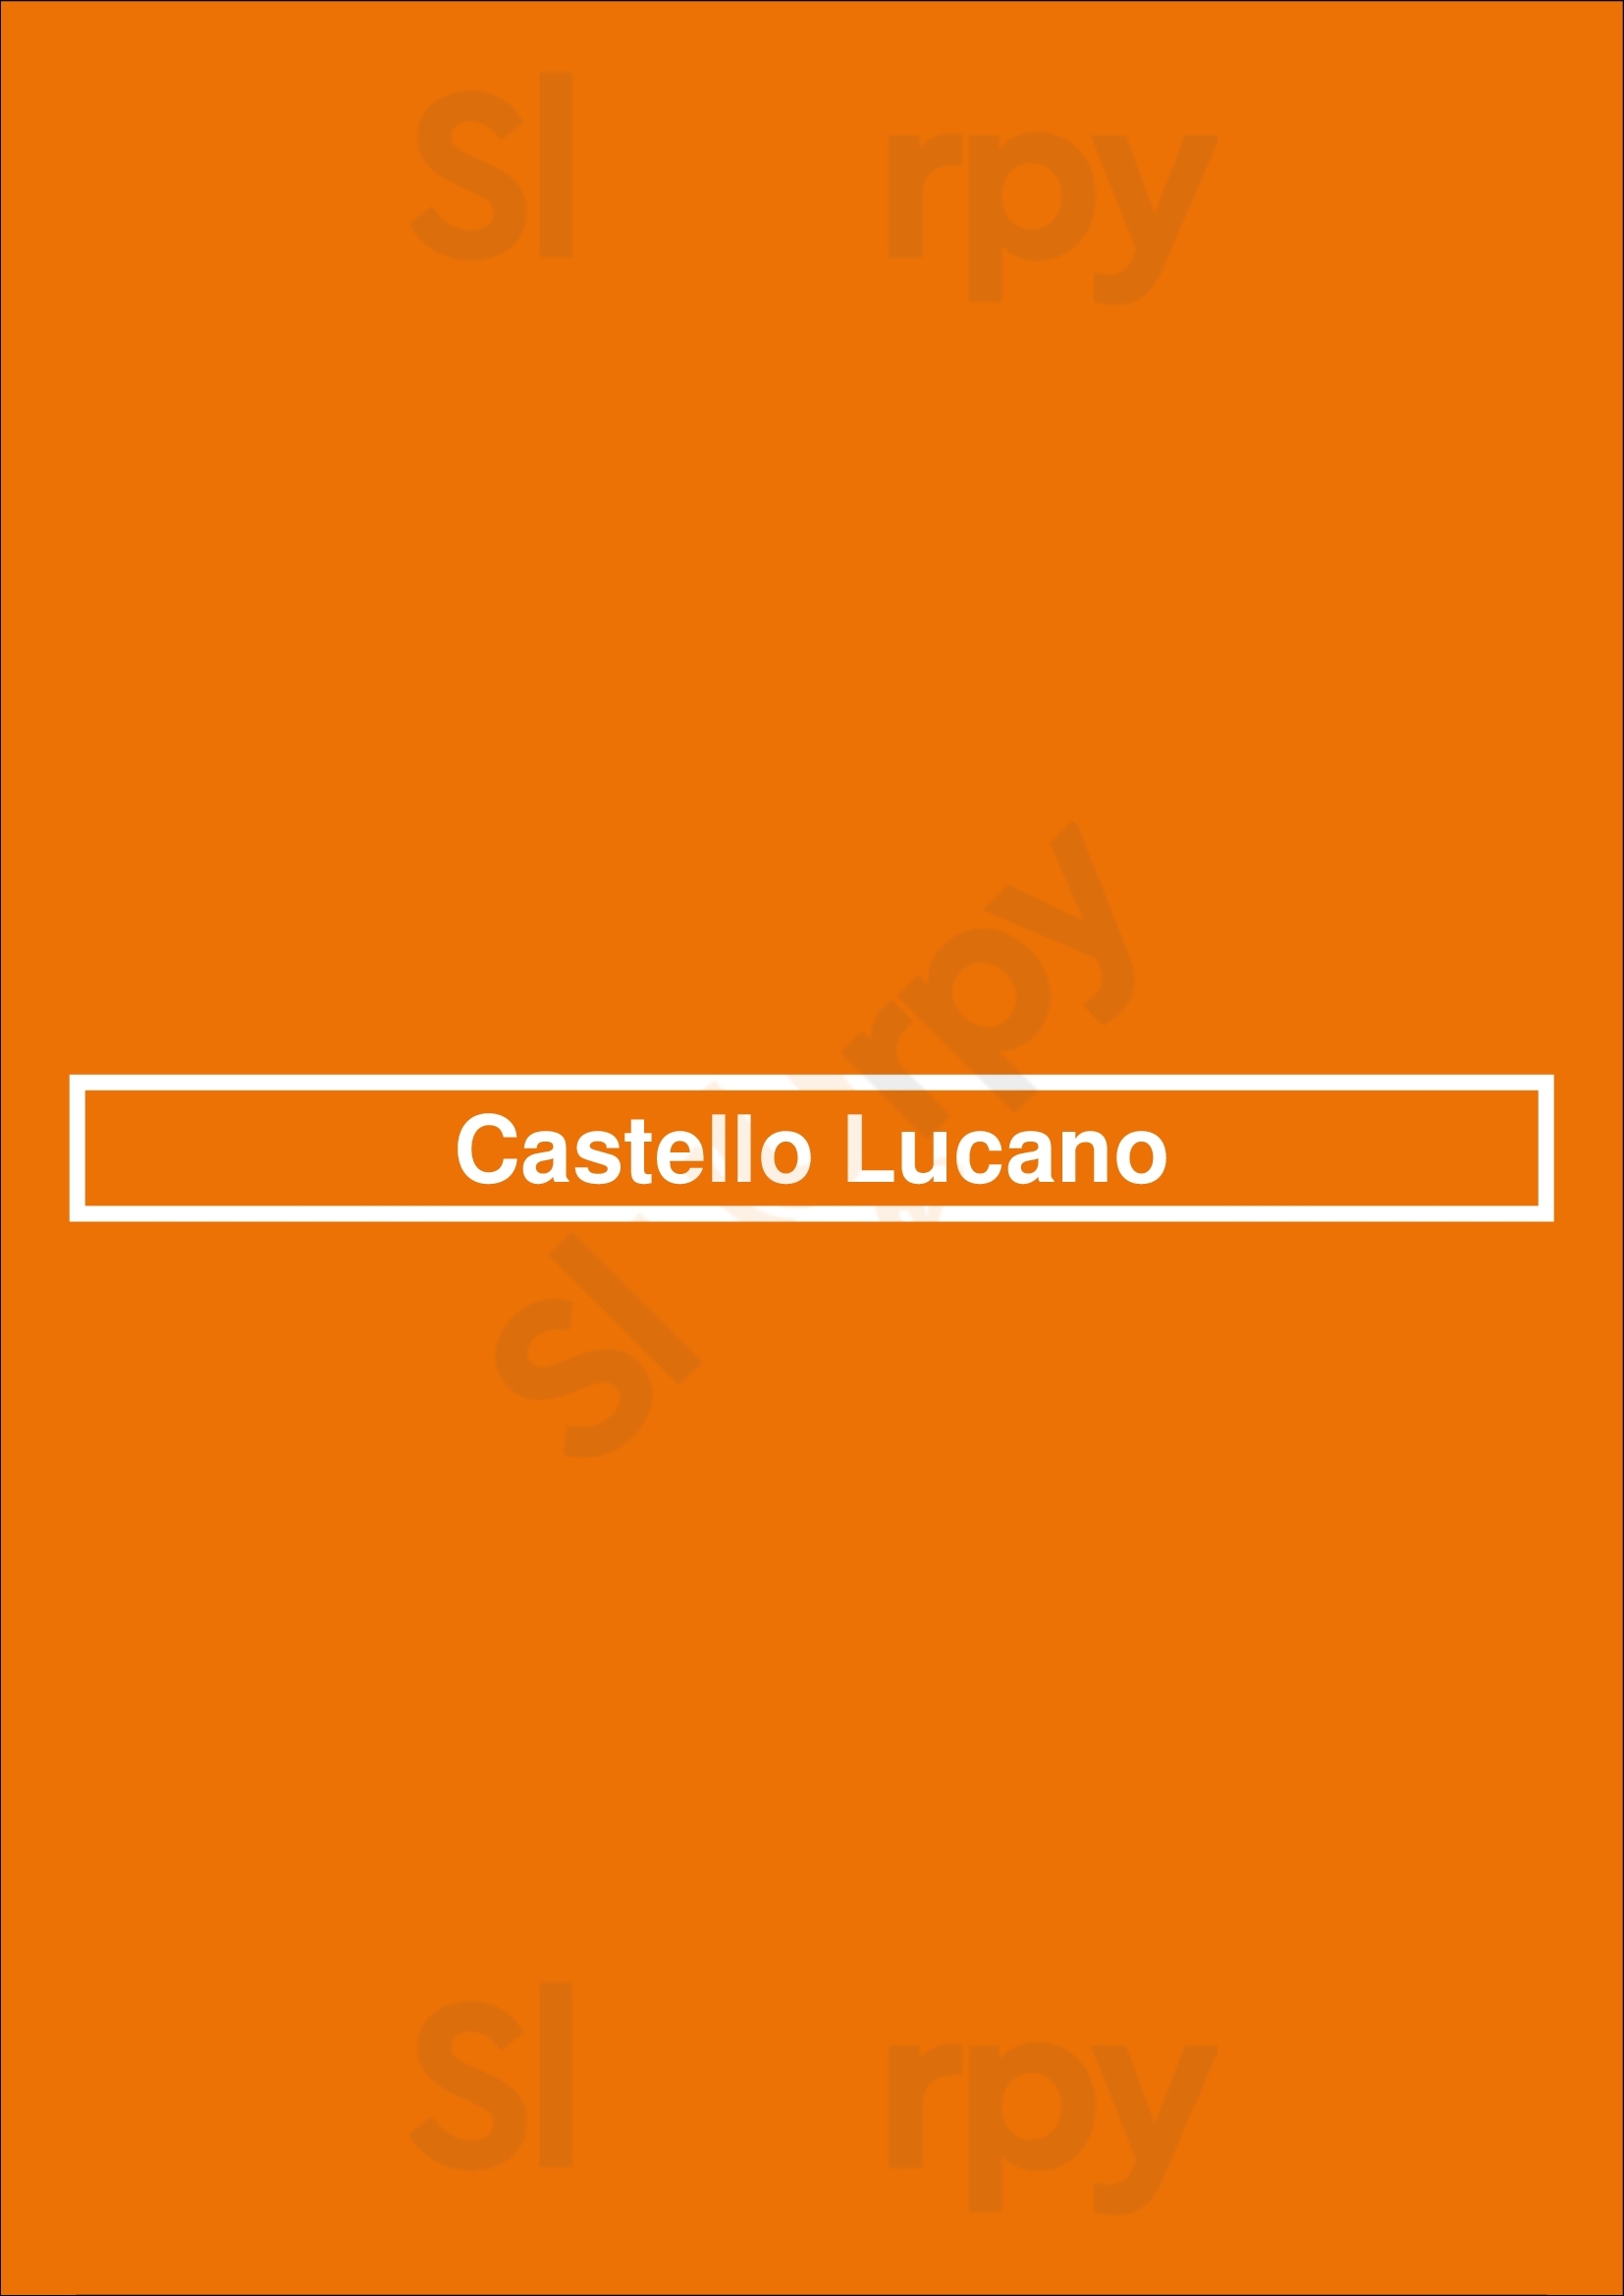 Castello Lucano Louvain Menu - 1